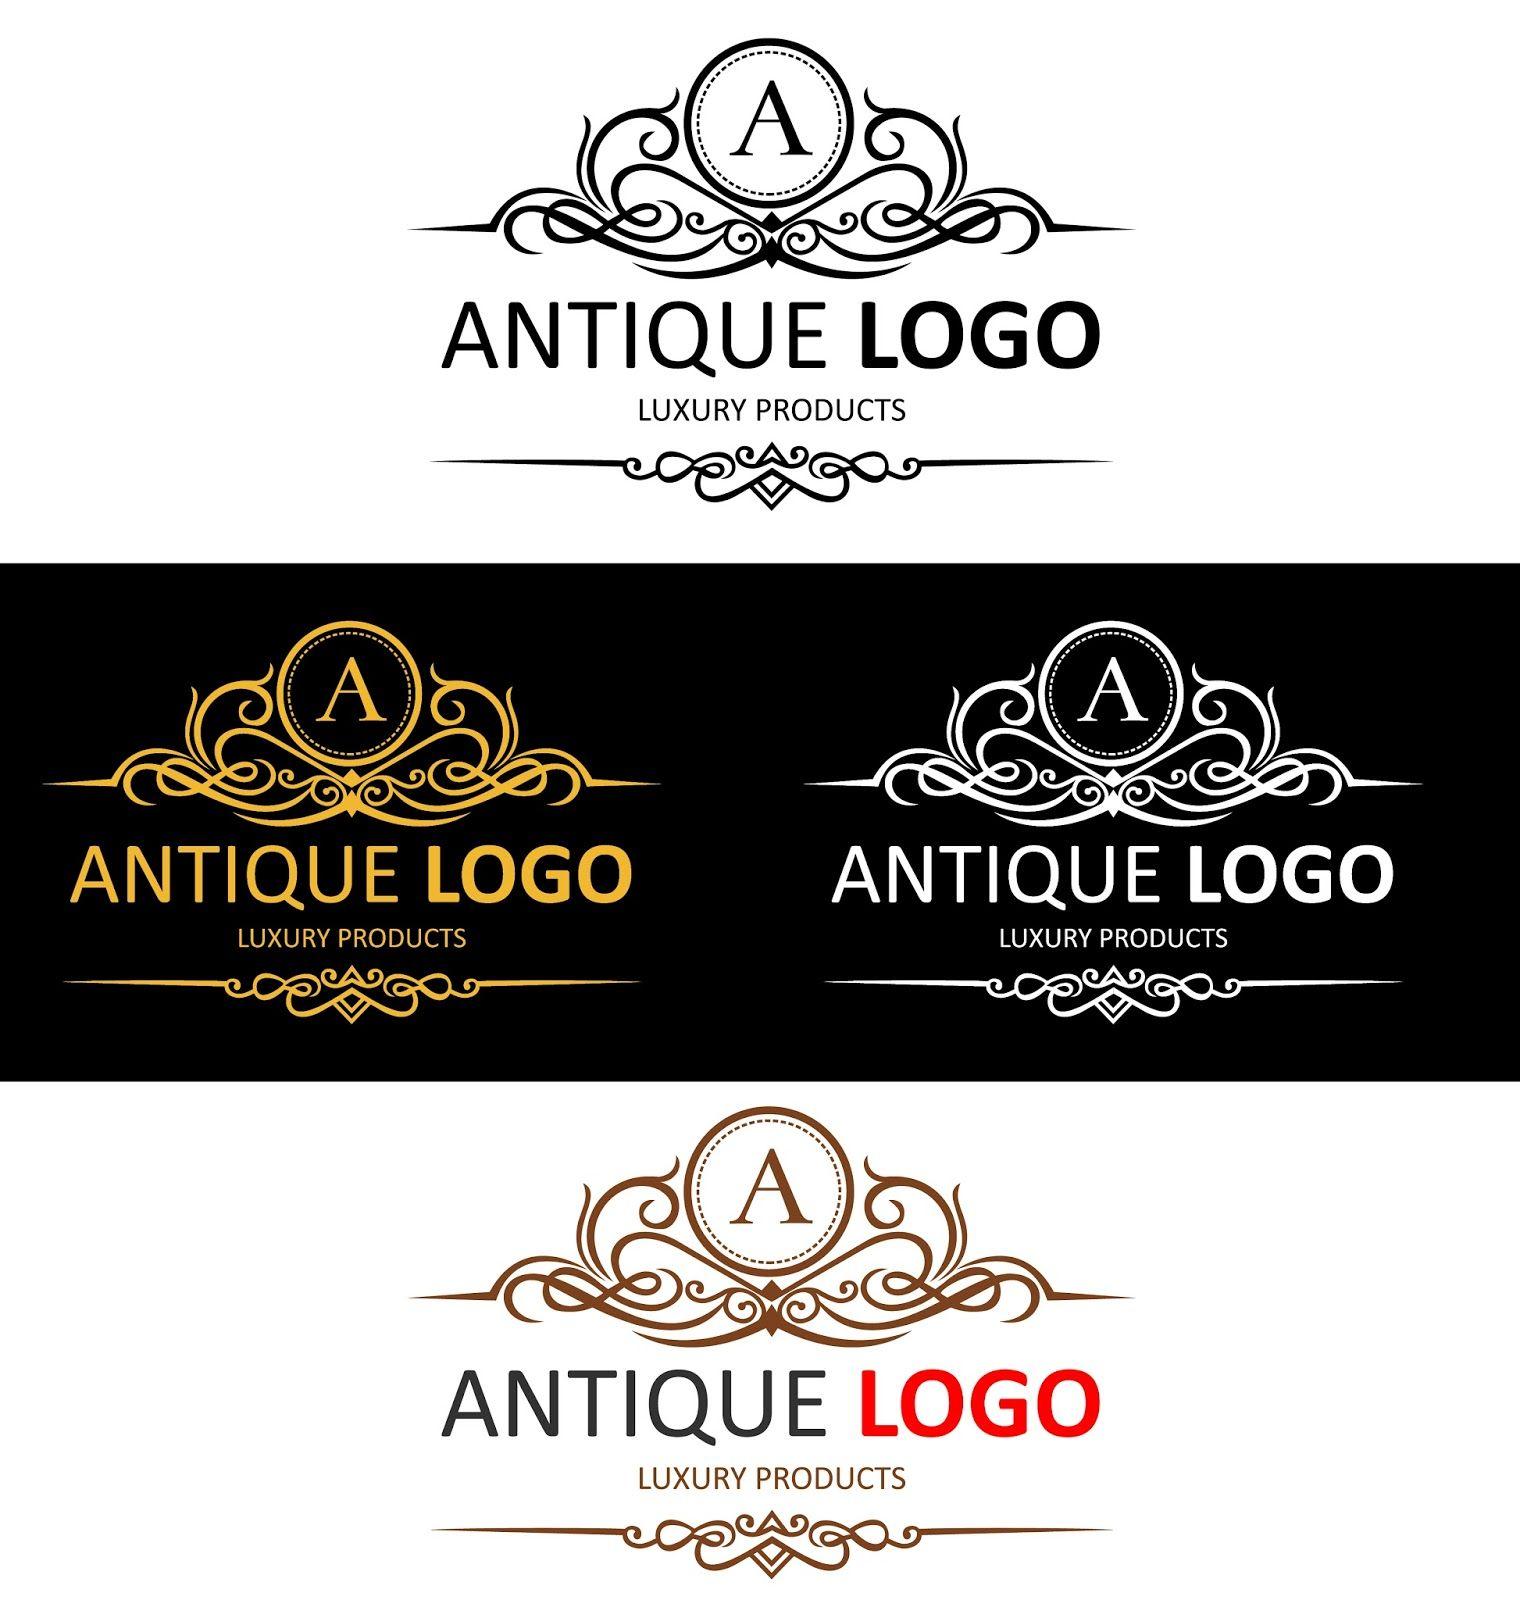 Antique Logo - Graphic Design: Antique logo vector on VectorStock